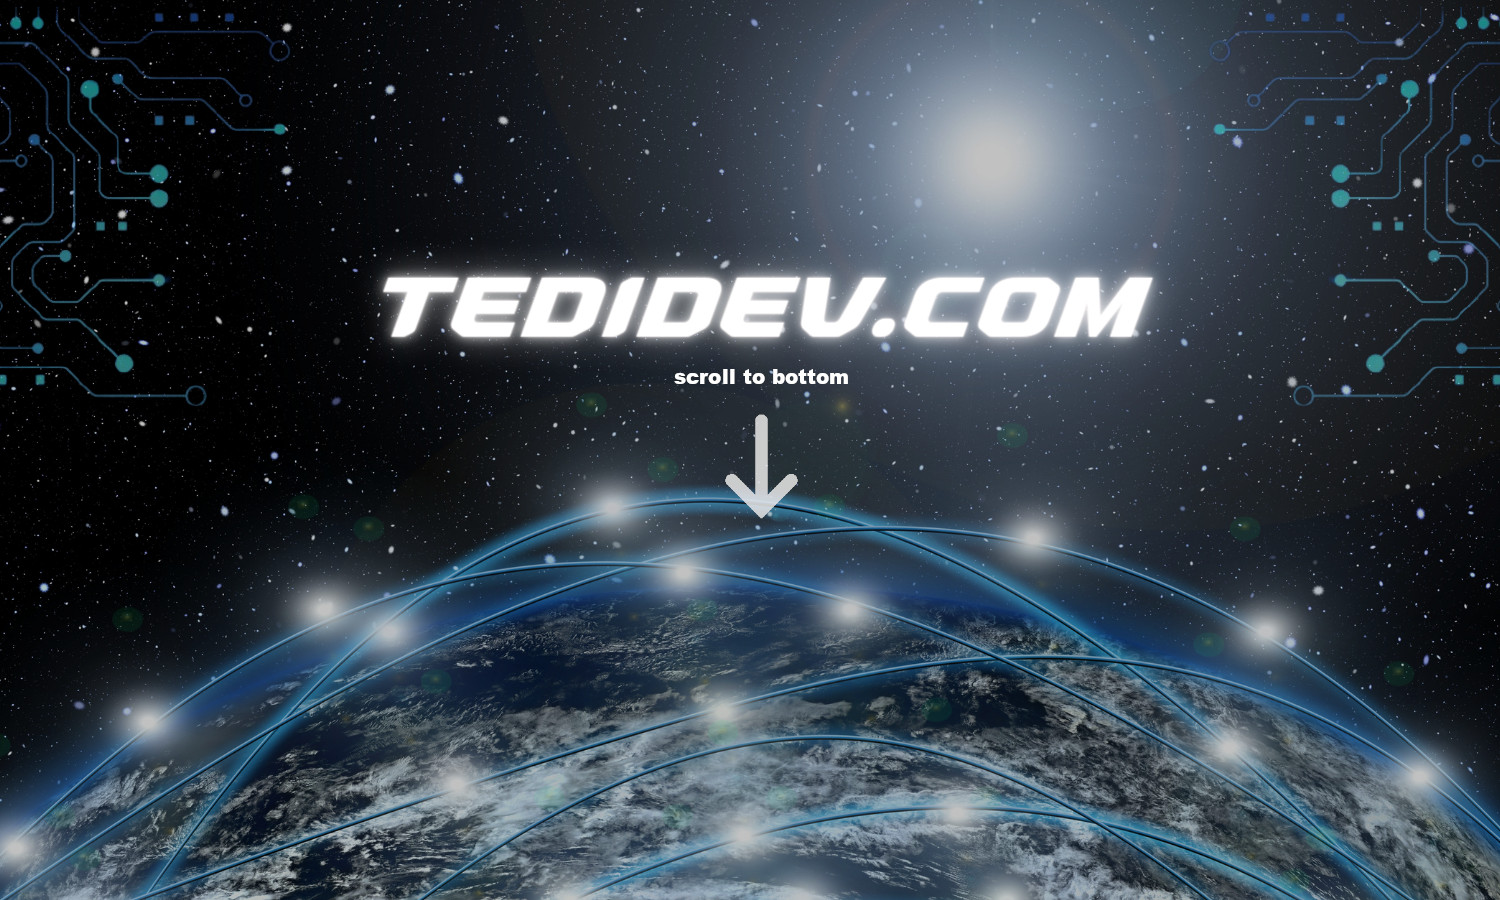 TediDev – The geek's blog